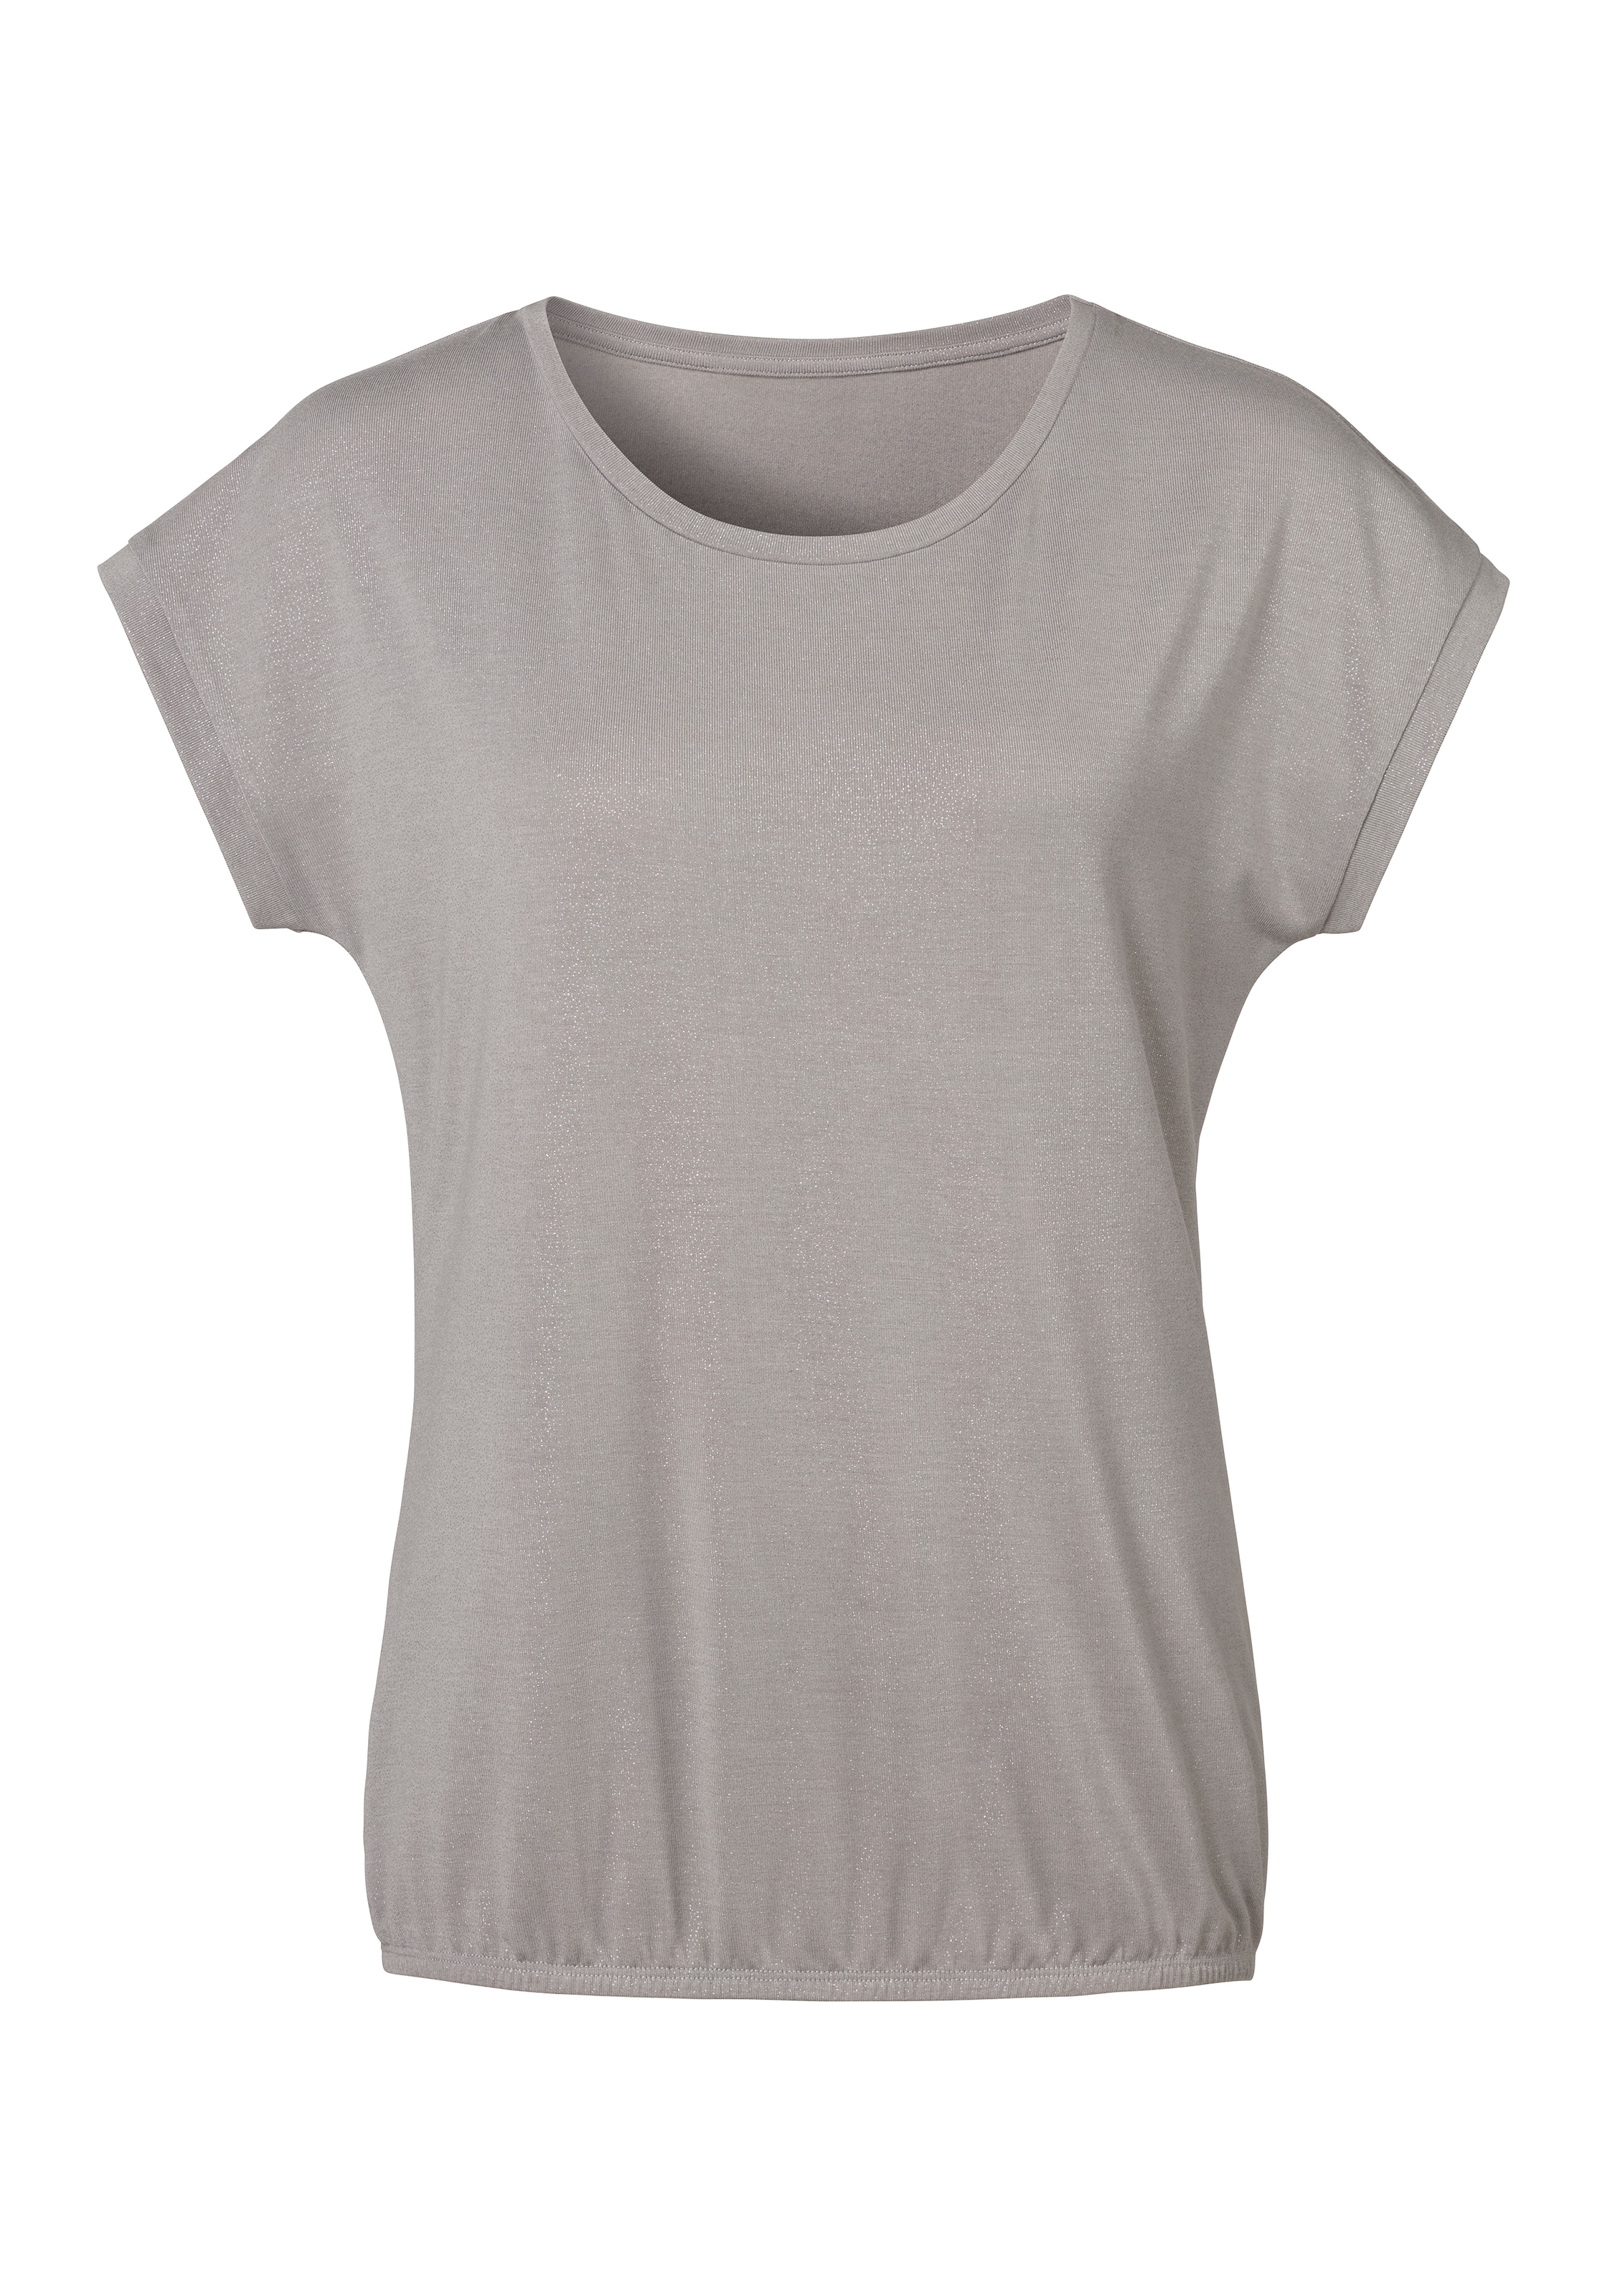 Vivance T-Shirt, mit silbrigem Glitzerdruck, Lingerie Kurzarmshirt, Unterwäsche Bademode, edler Look » & LASCANA online kaufen 